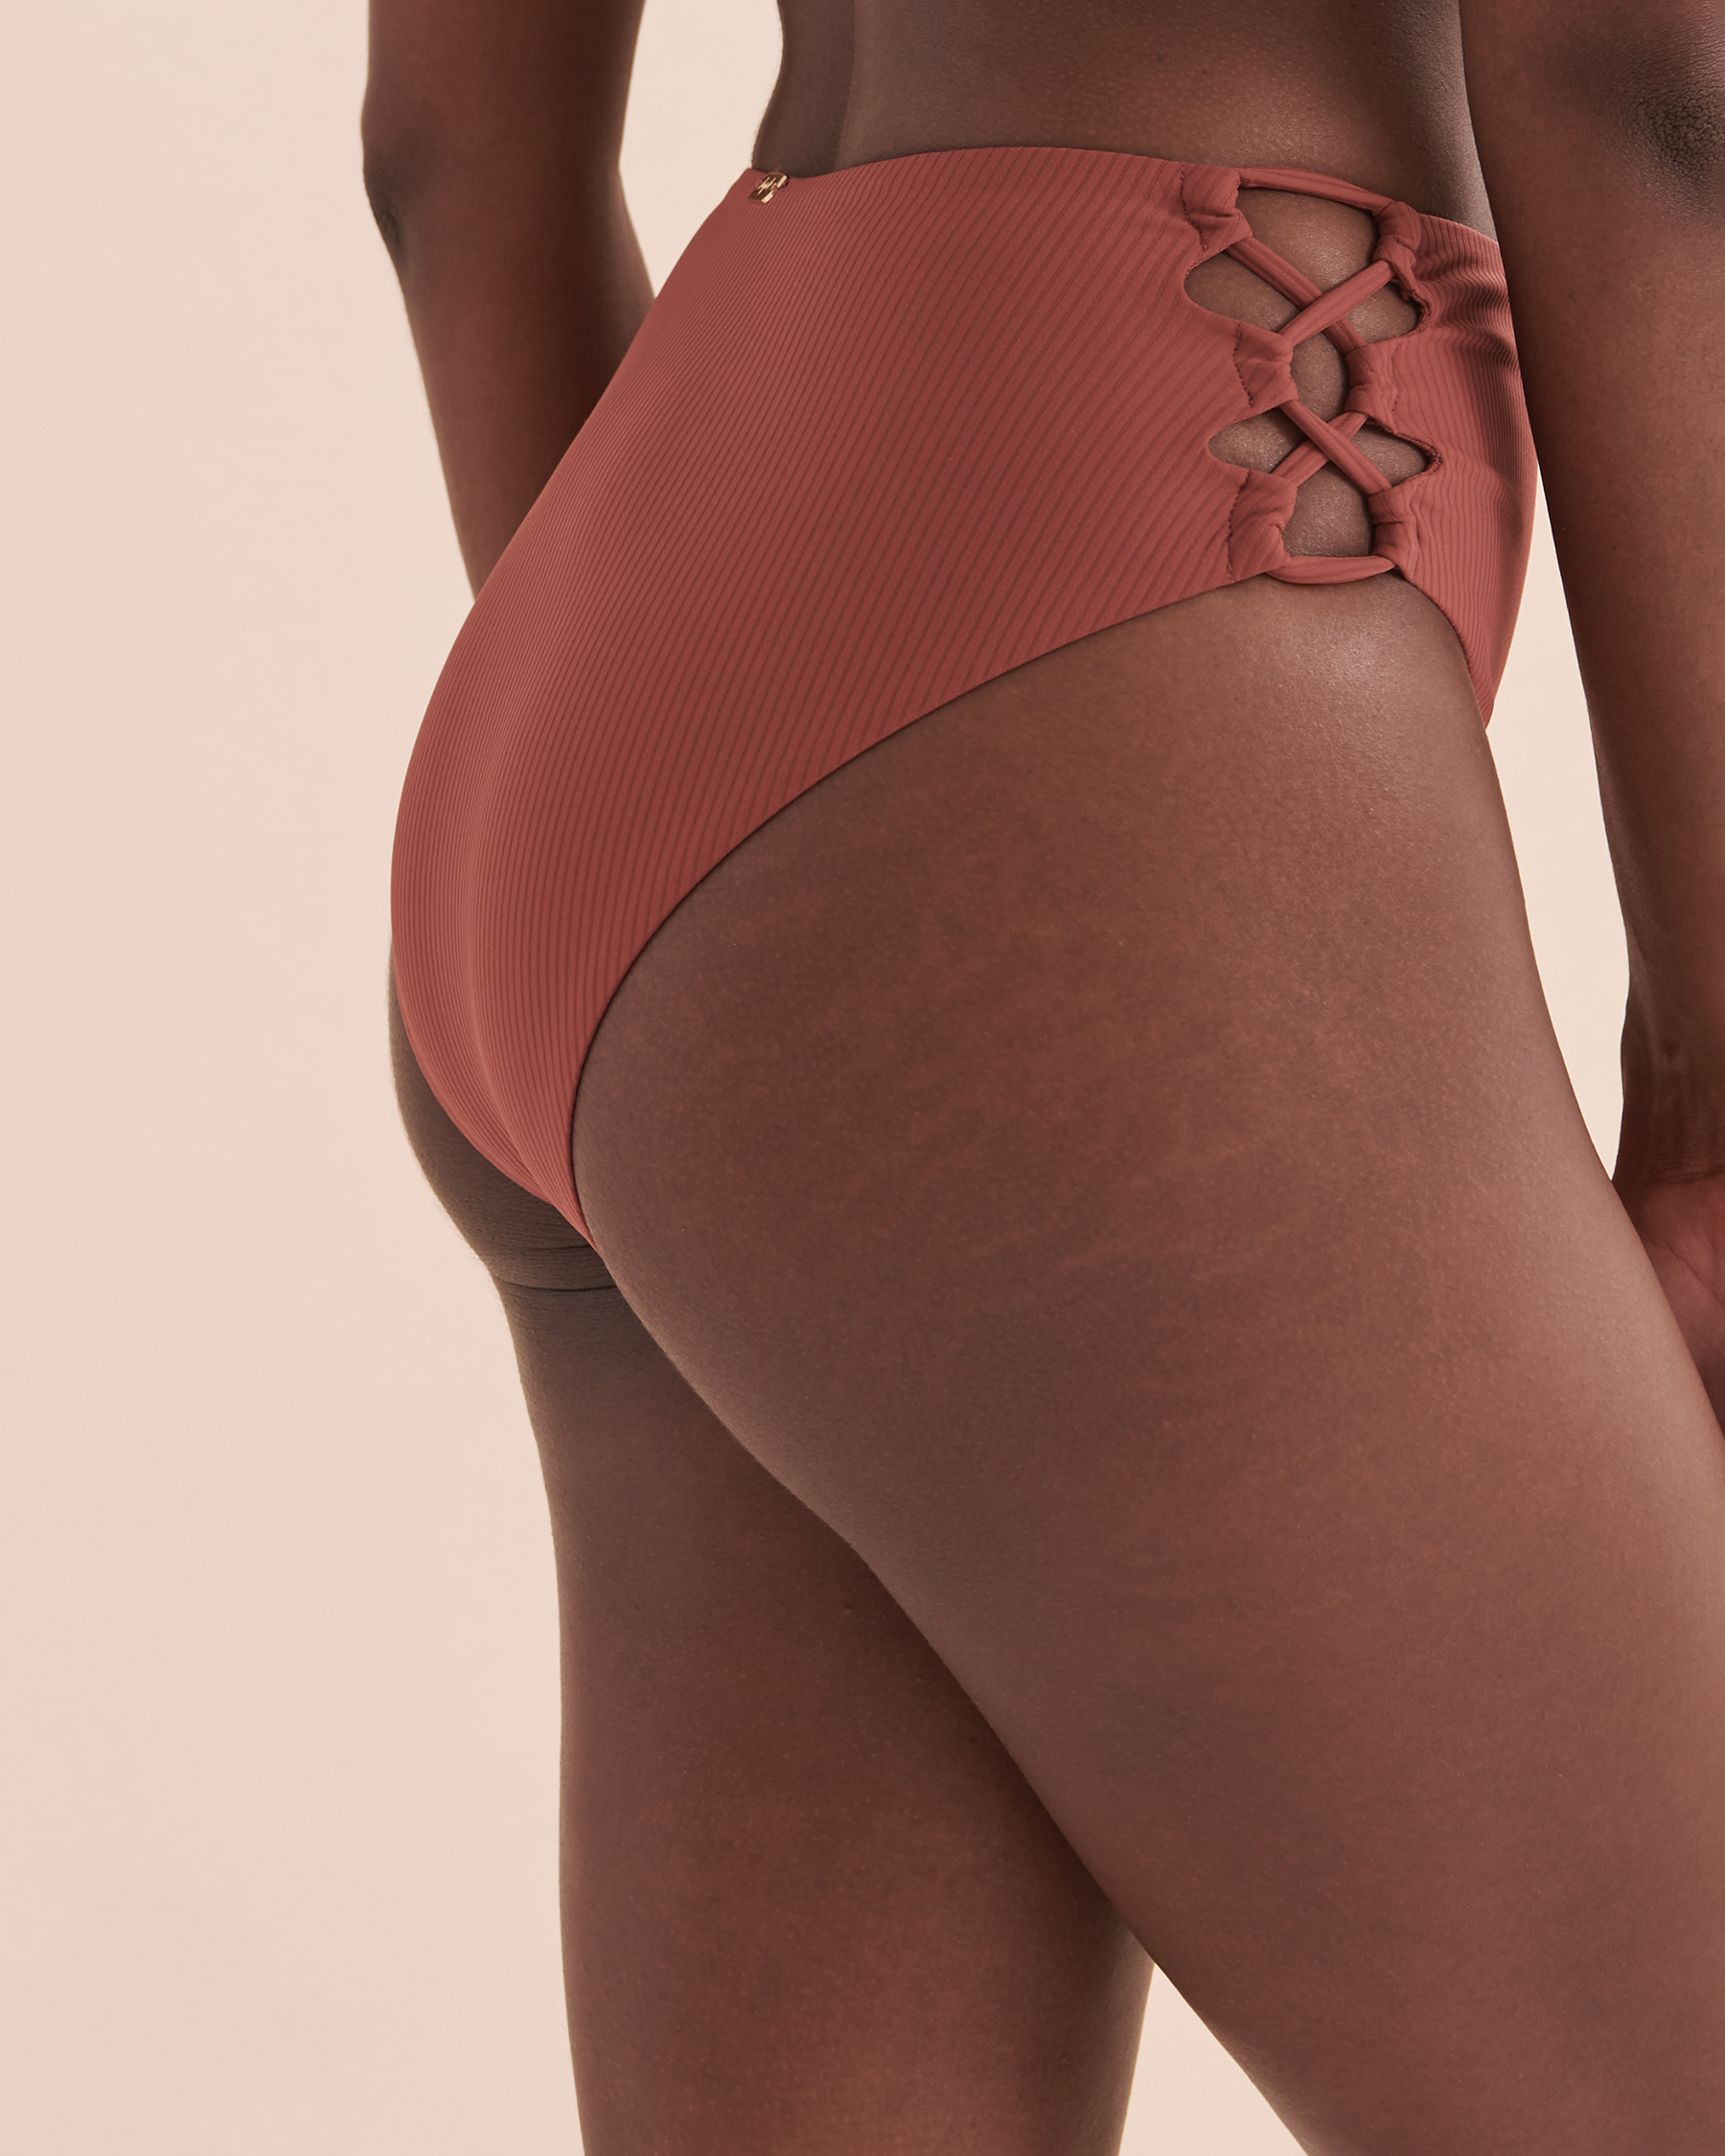 TROPIK Textured Side Tie High Waist Bikini Bottom Brown 01300236 - View5